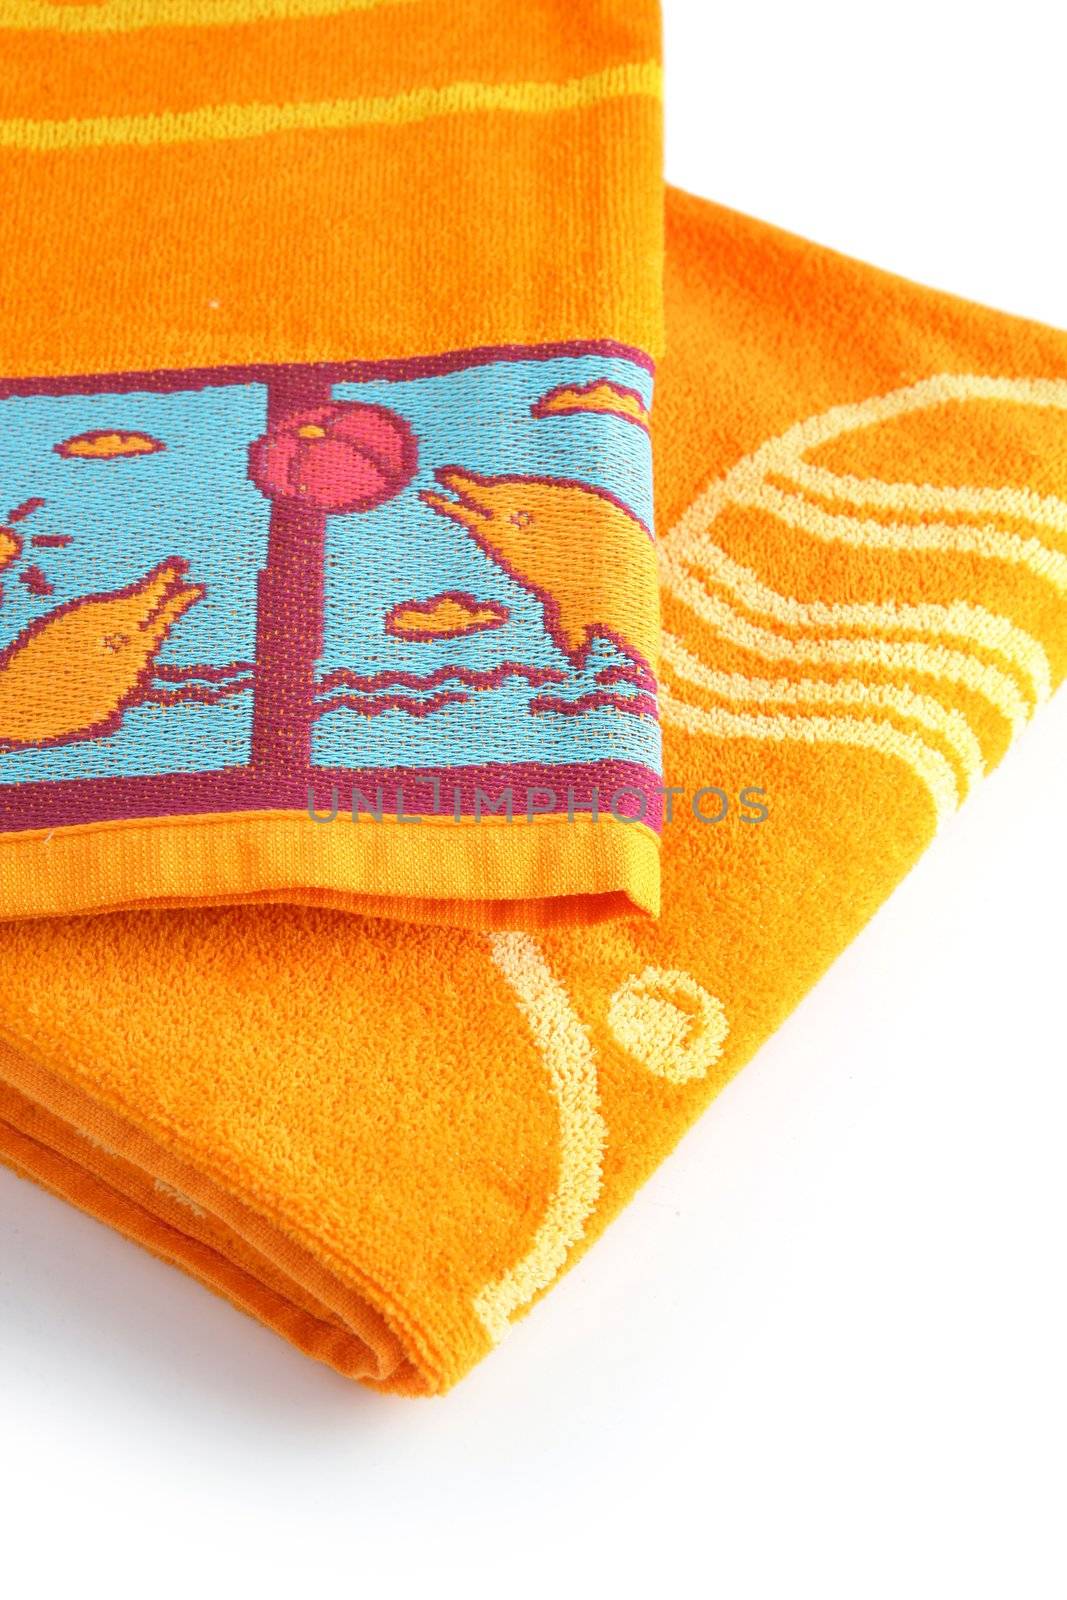 Child's beach towel by phovoir